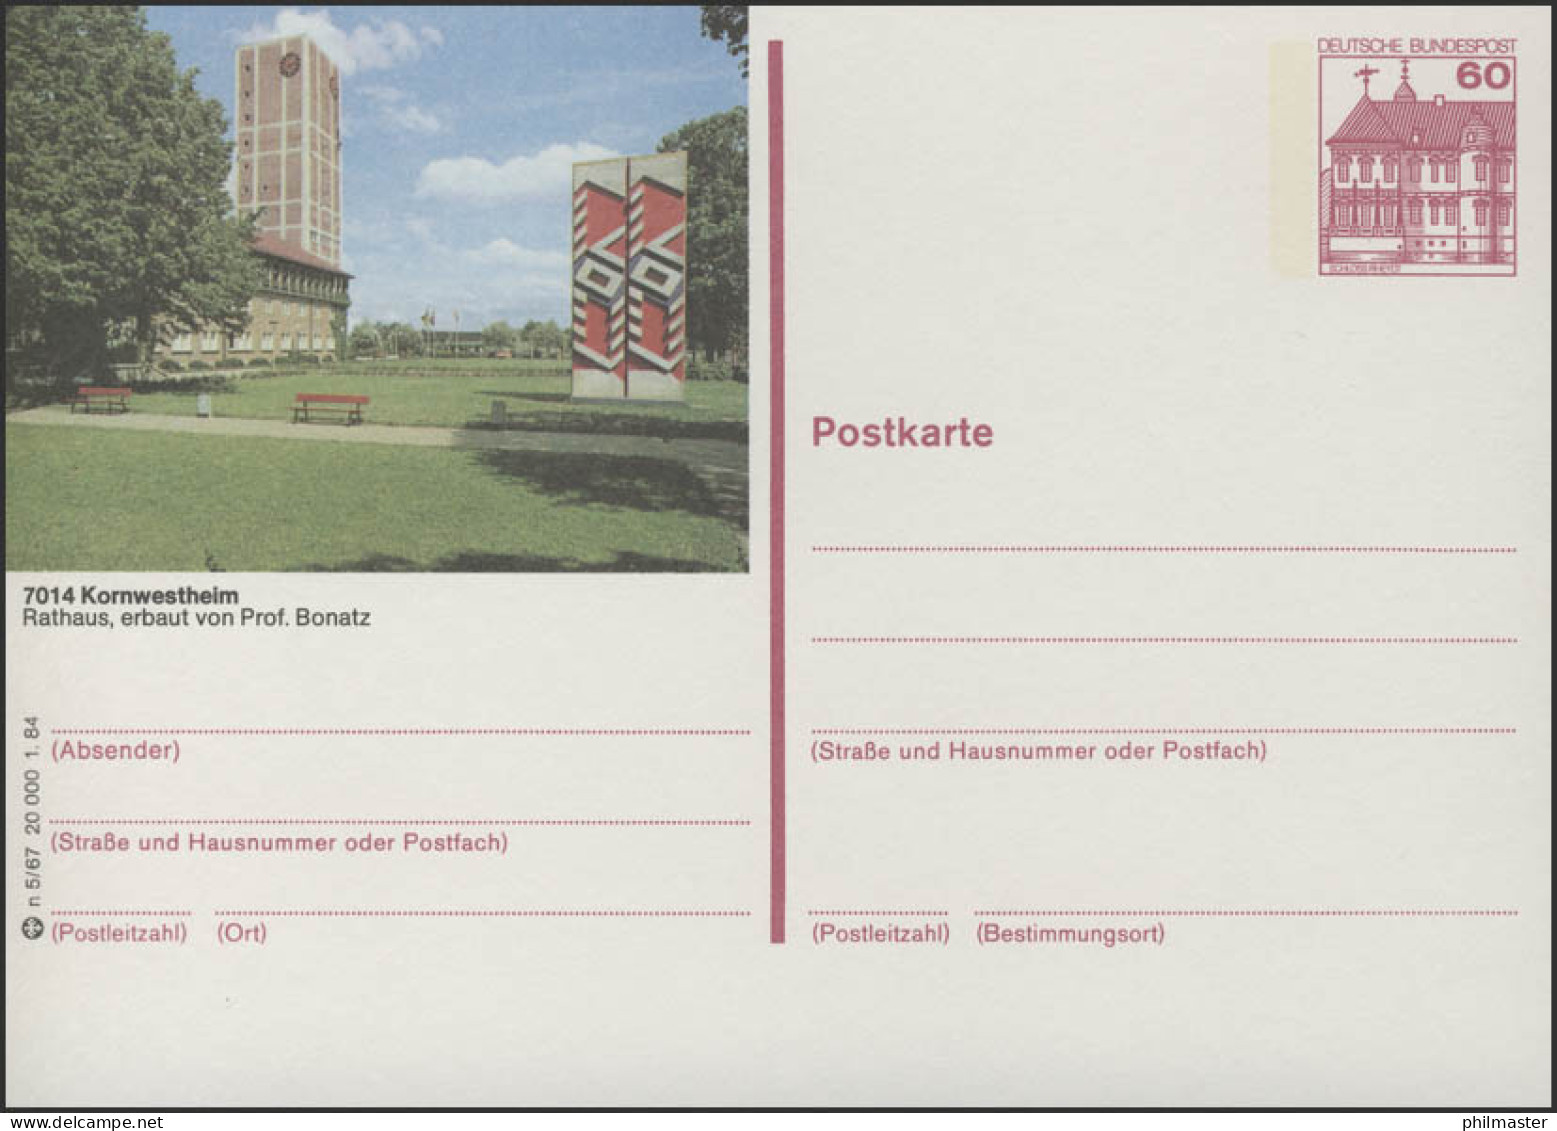 P138-n5/067 7014 Kornwestheim - Rathaus ** - Illustrated Postcards - Mint